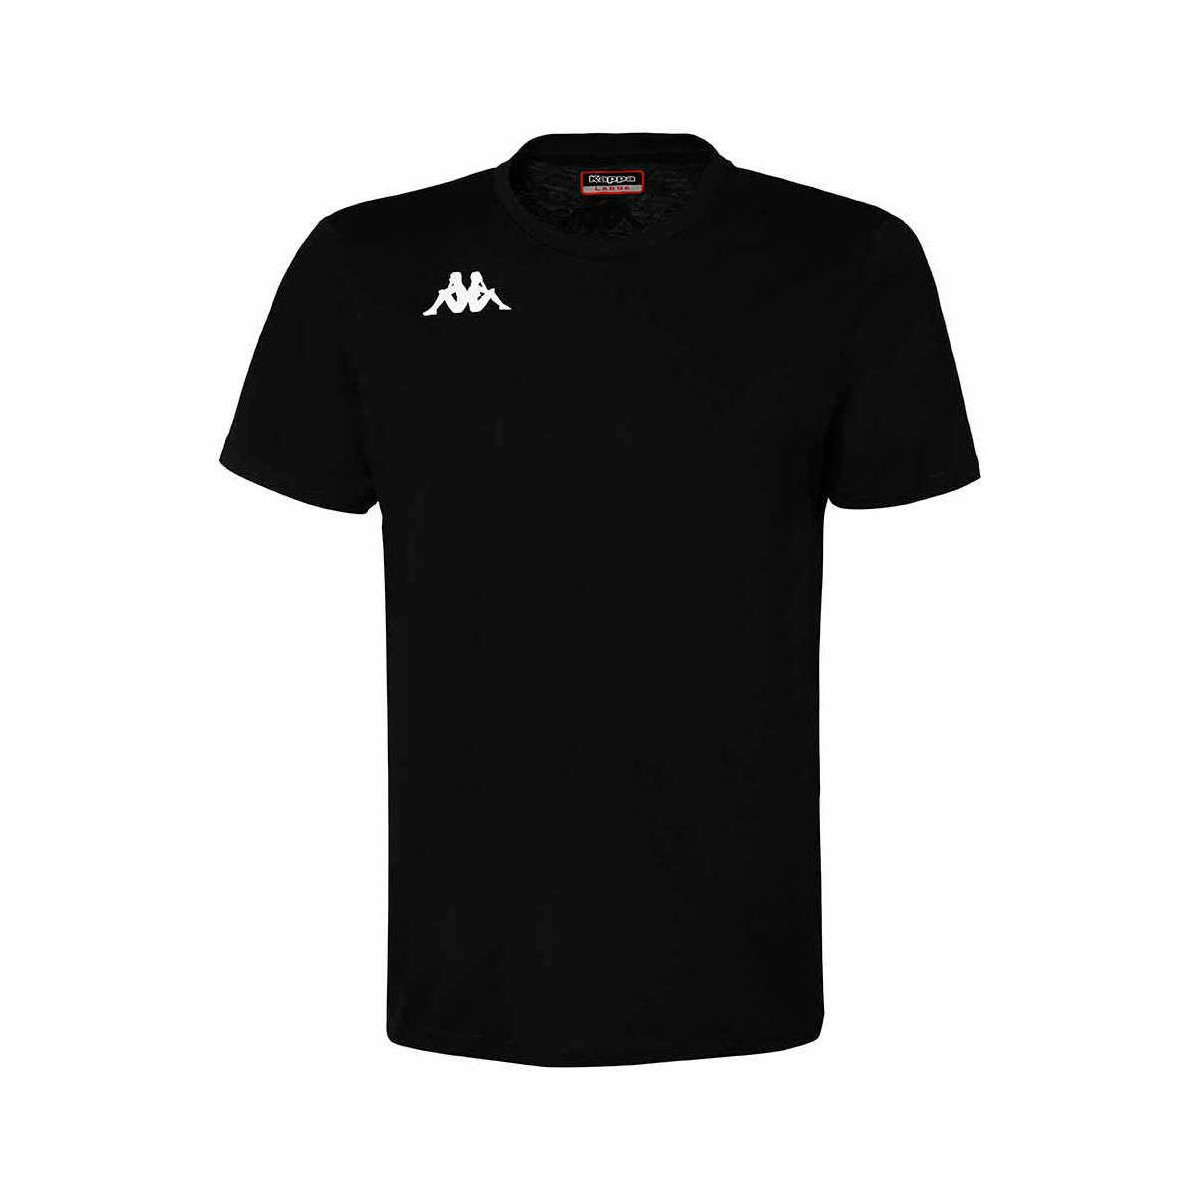 Vêtements Garçon T-shirts manches courtes Kappa T-shirt Brizzo Noir